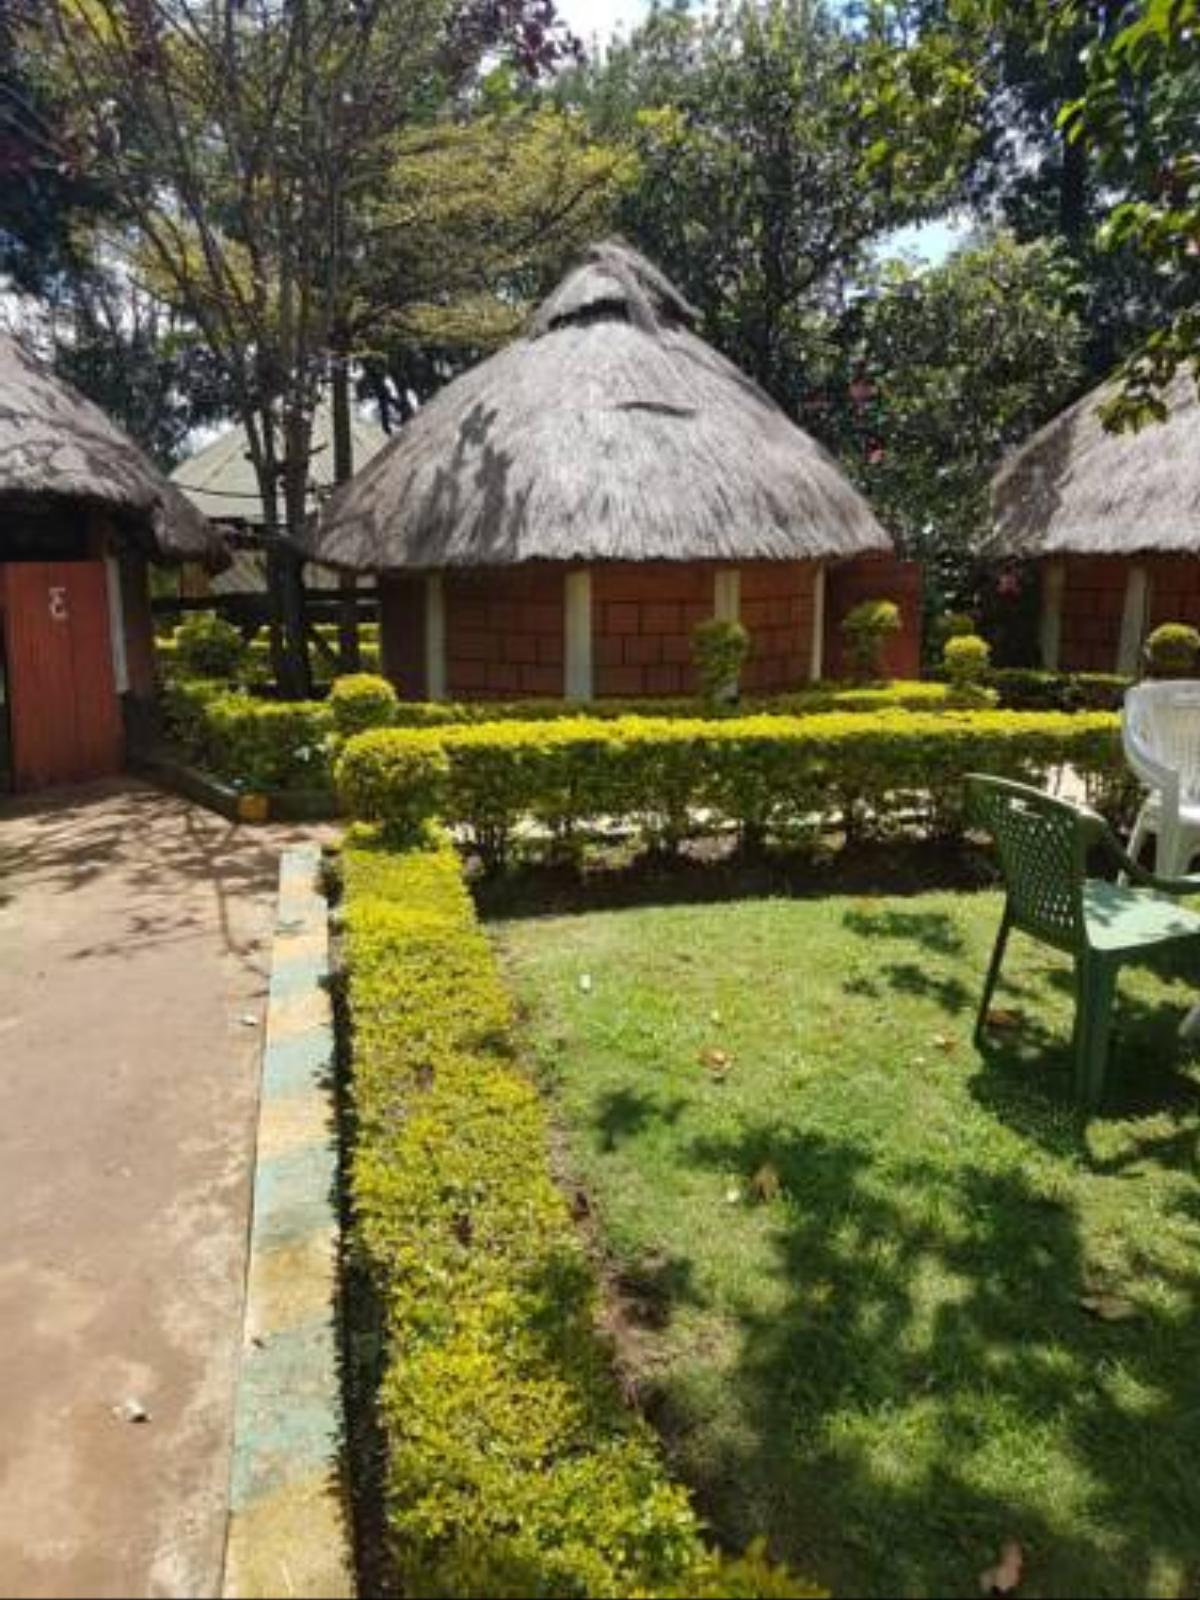 Soin Hotel Hotel Eldoret Kenya